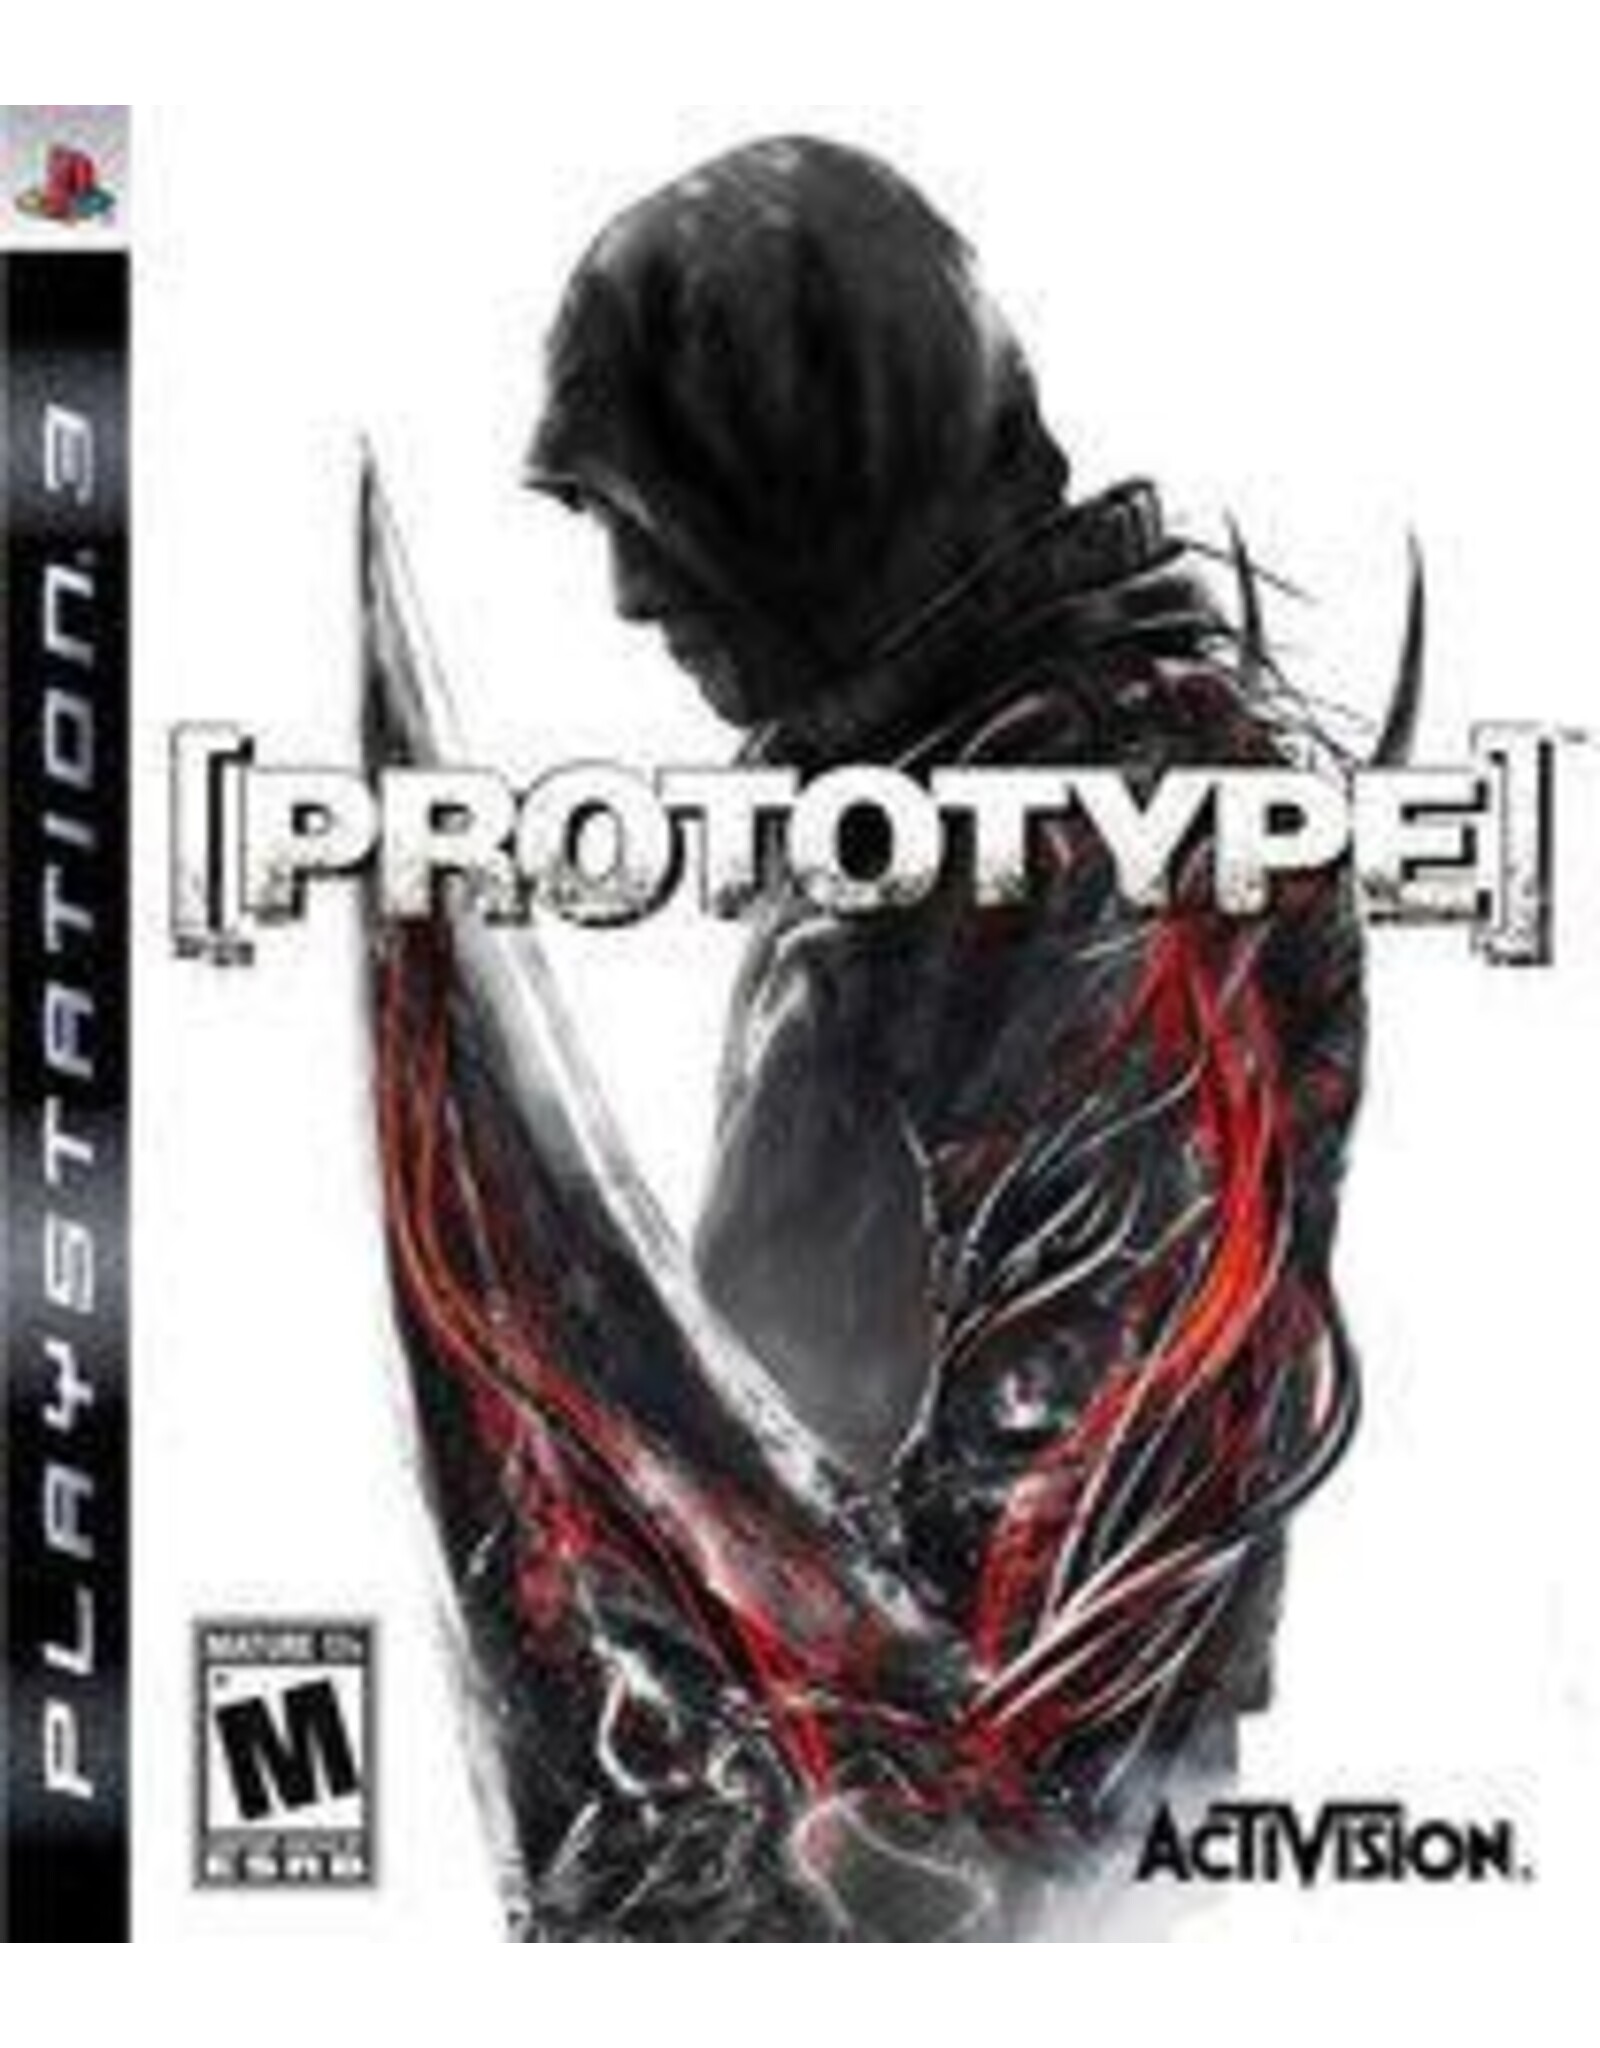 Playstation 3 Prototype (CiB)